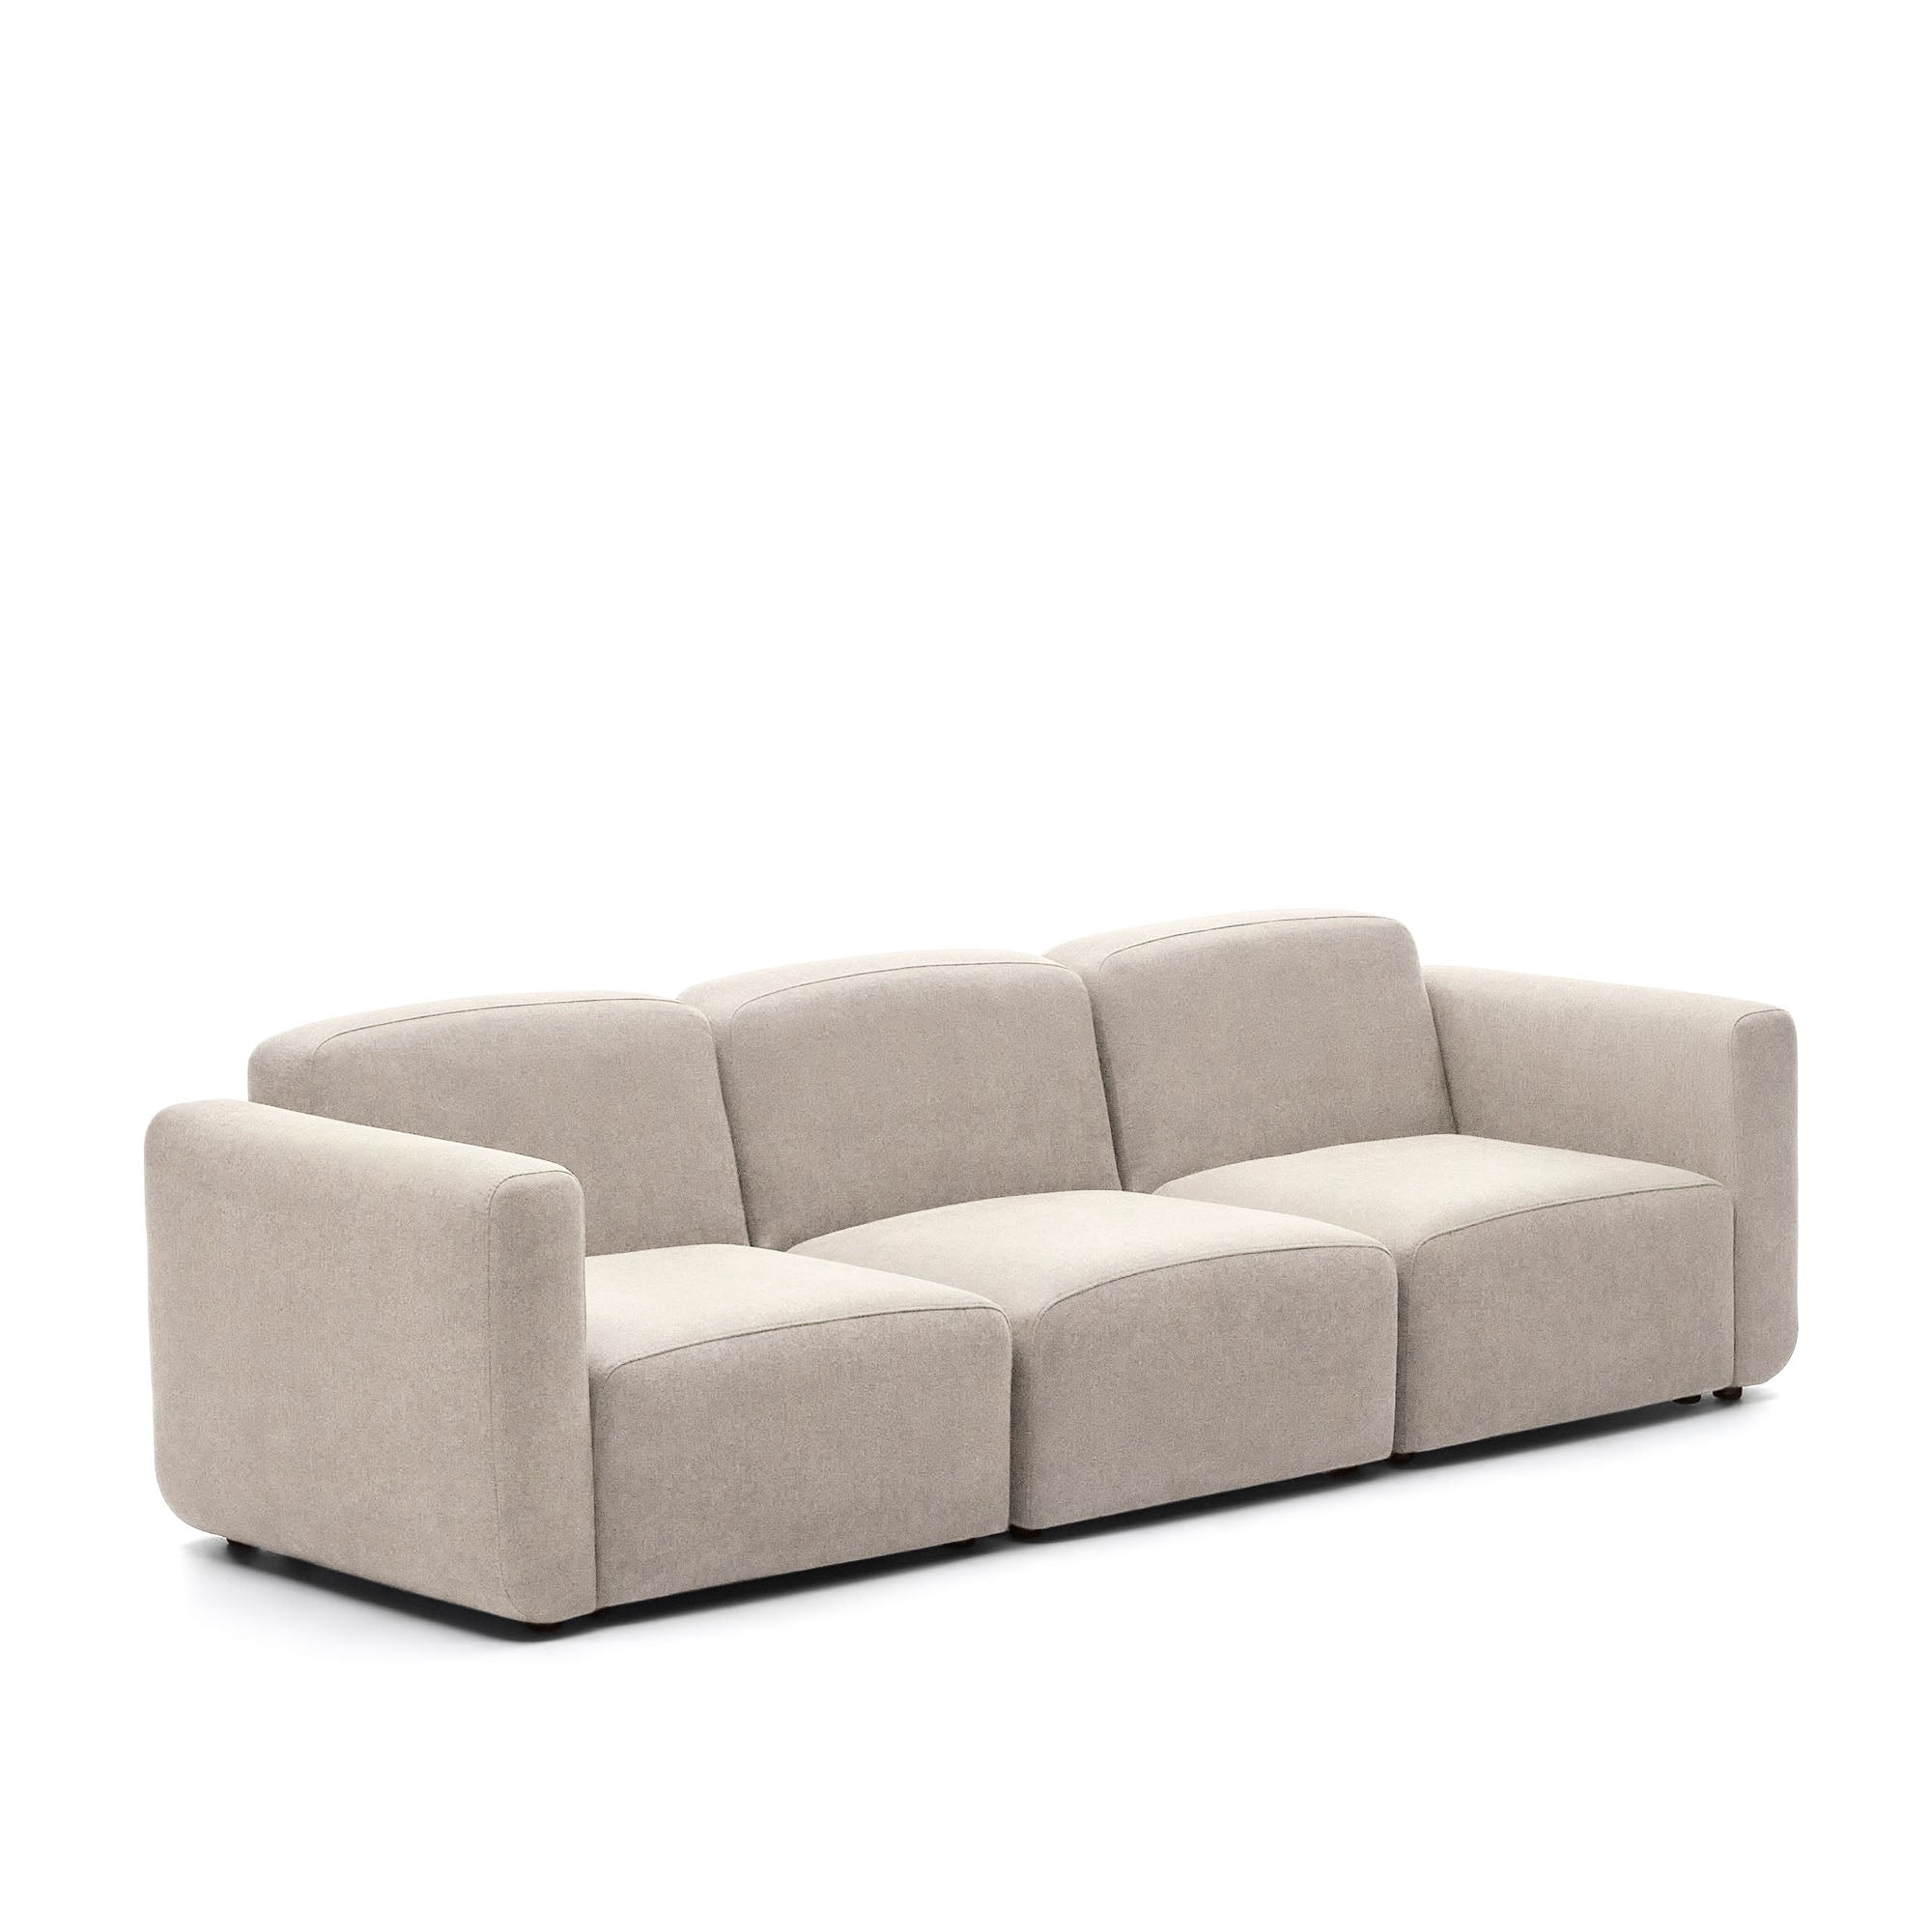 Neom 3 seater modular sofa in beige, 263 cm